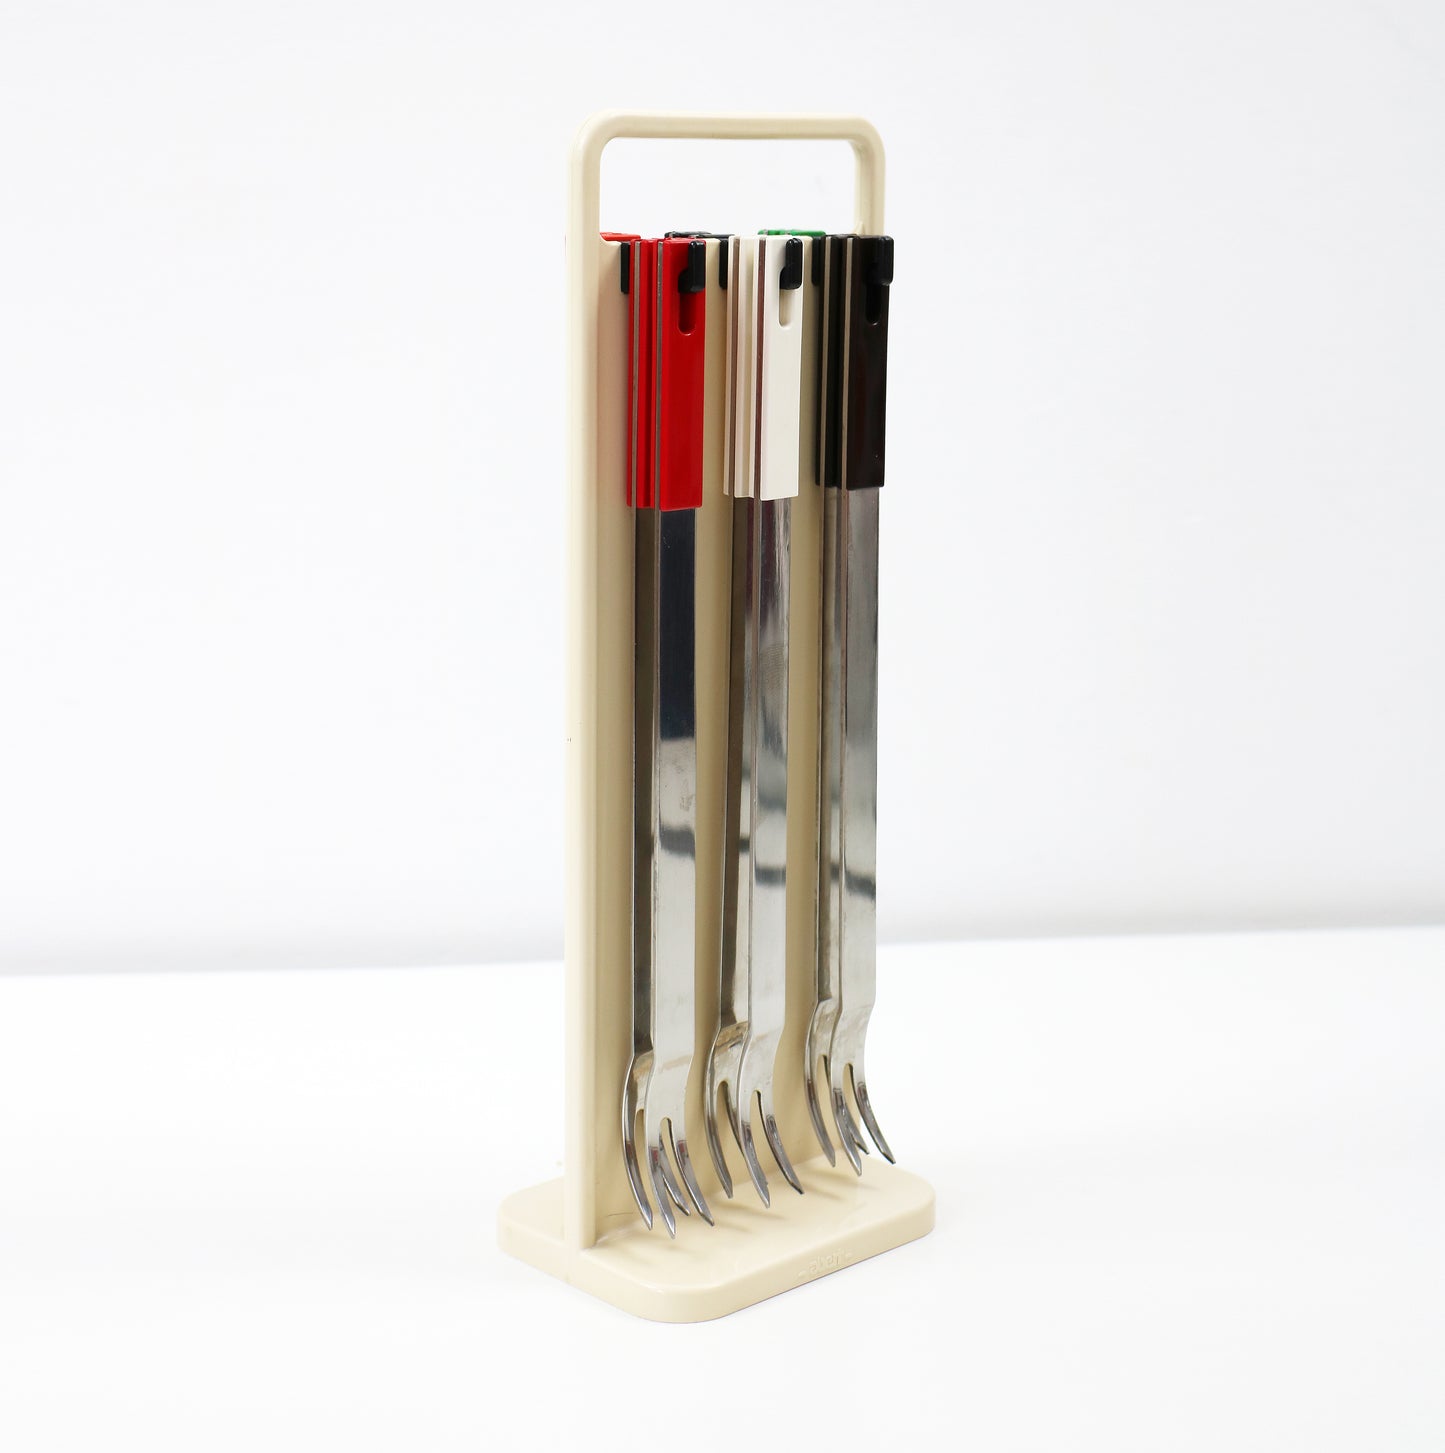 Modernist fondue fork set by Abert Italy 1973